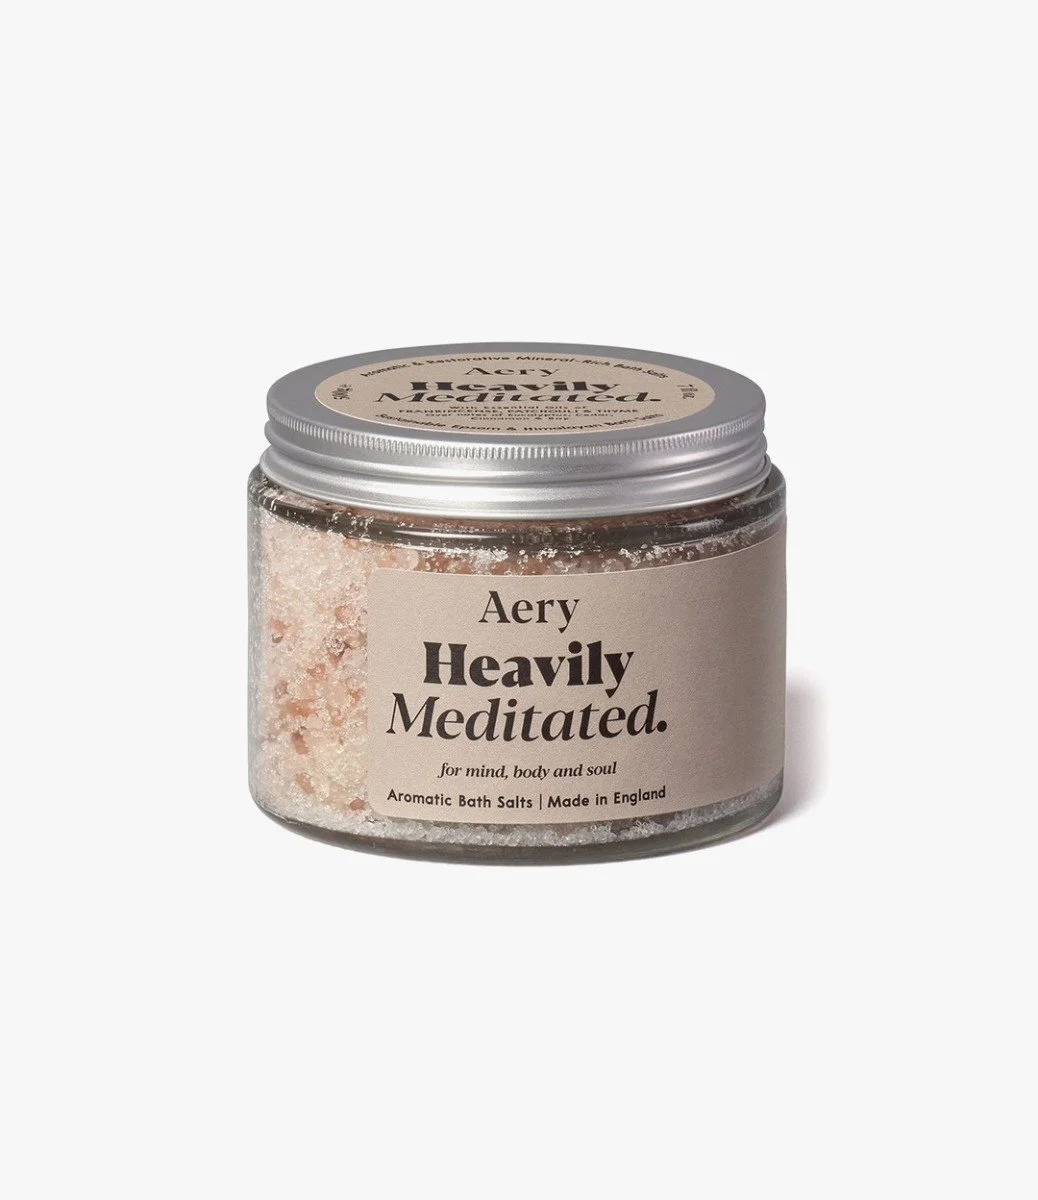 500g Bath Salts - Heavily Meditated